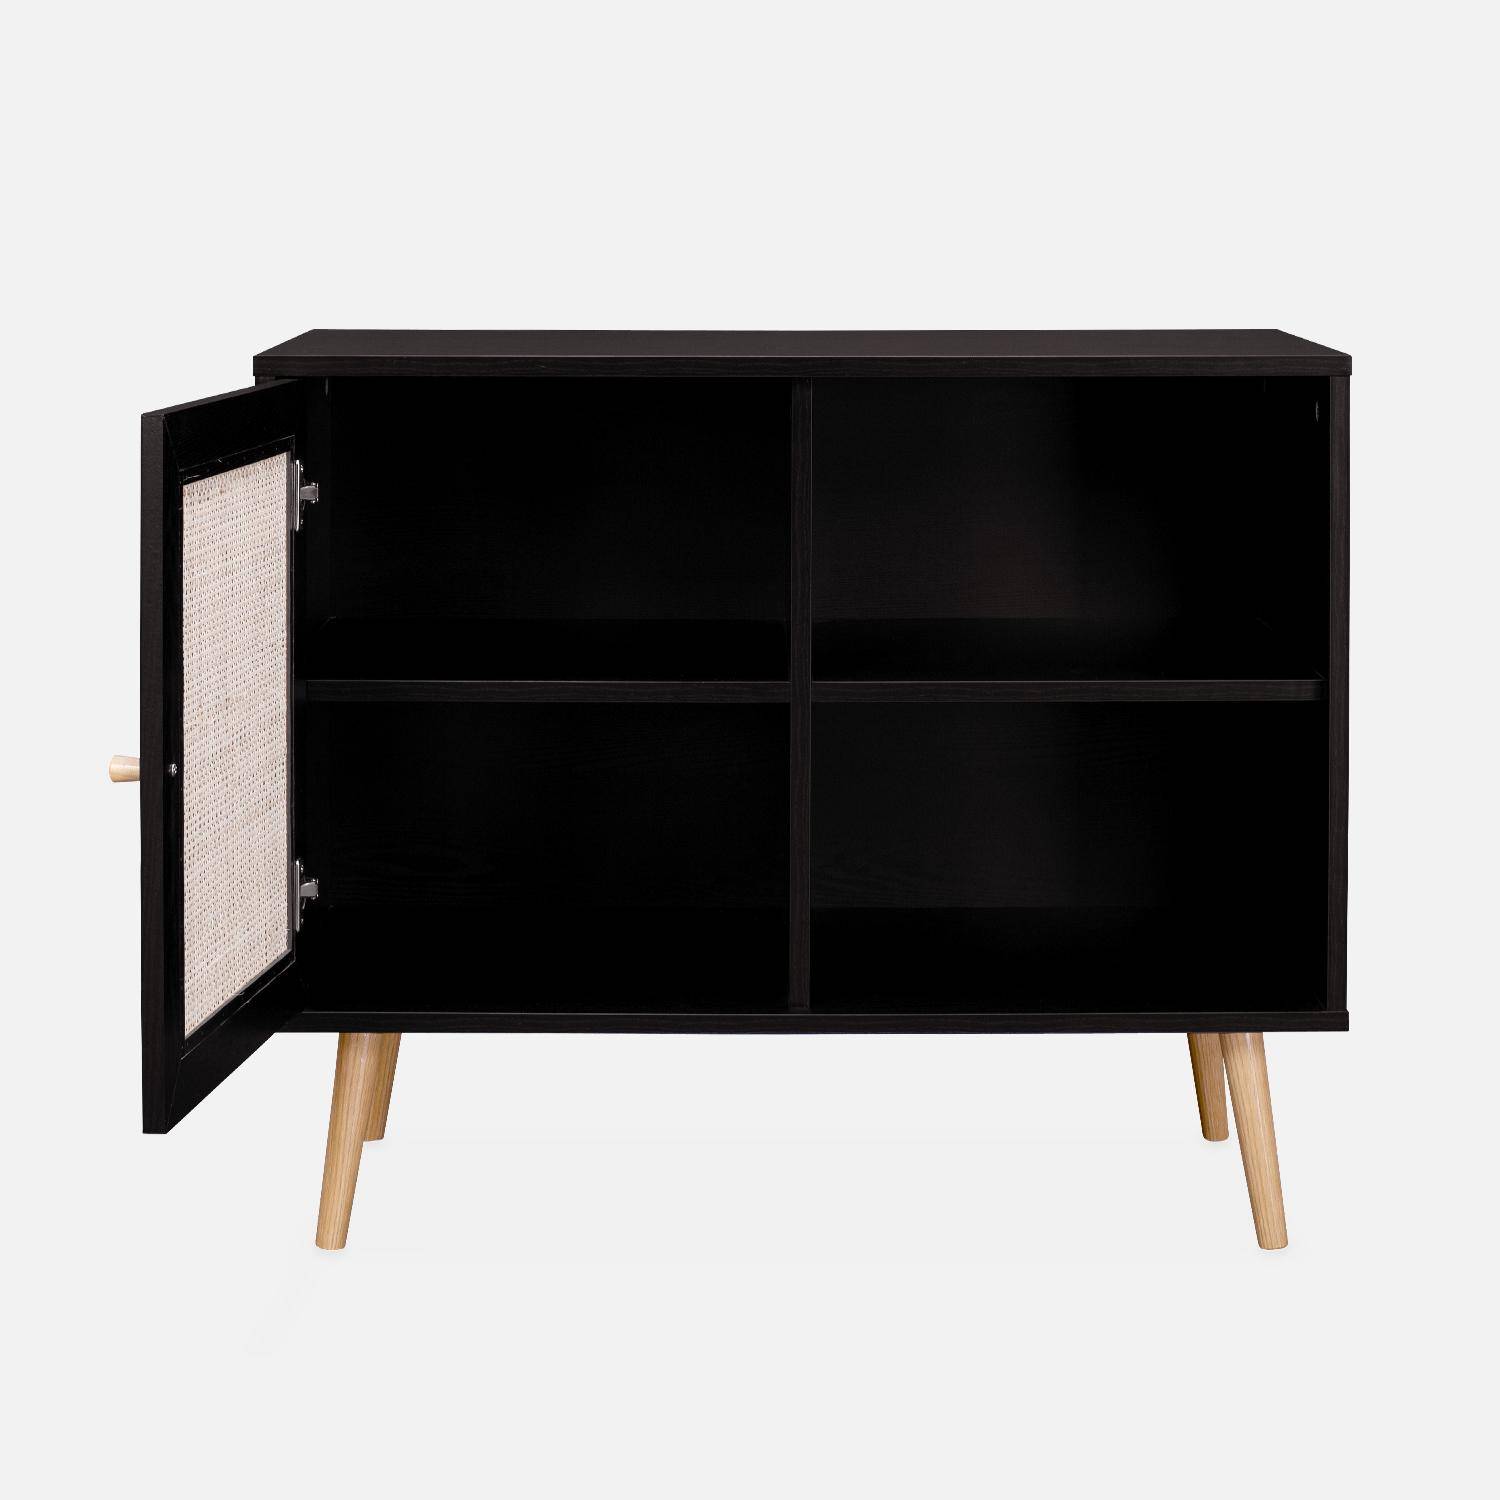 Wooden and cane rattan detail storage cabinet with 2 shelves, 1 cupboard, Scandi-style legs, 80x39x65.8cm - Boheme - Black,sweeek,Photo4